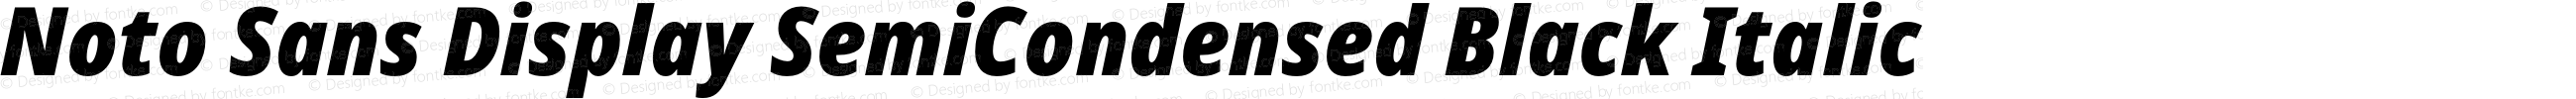 Noto Sans Display SemiCondensed Black Italic